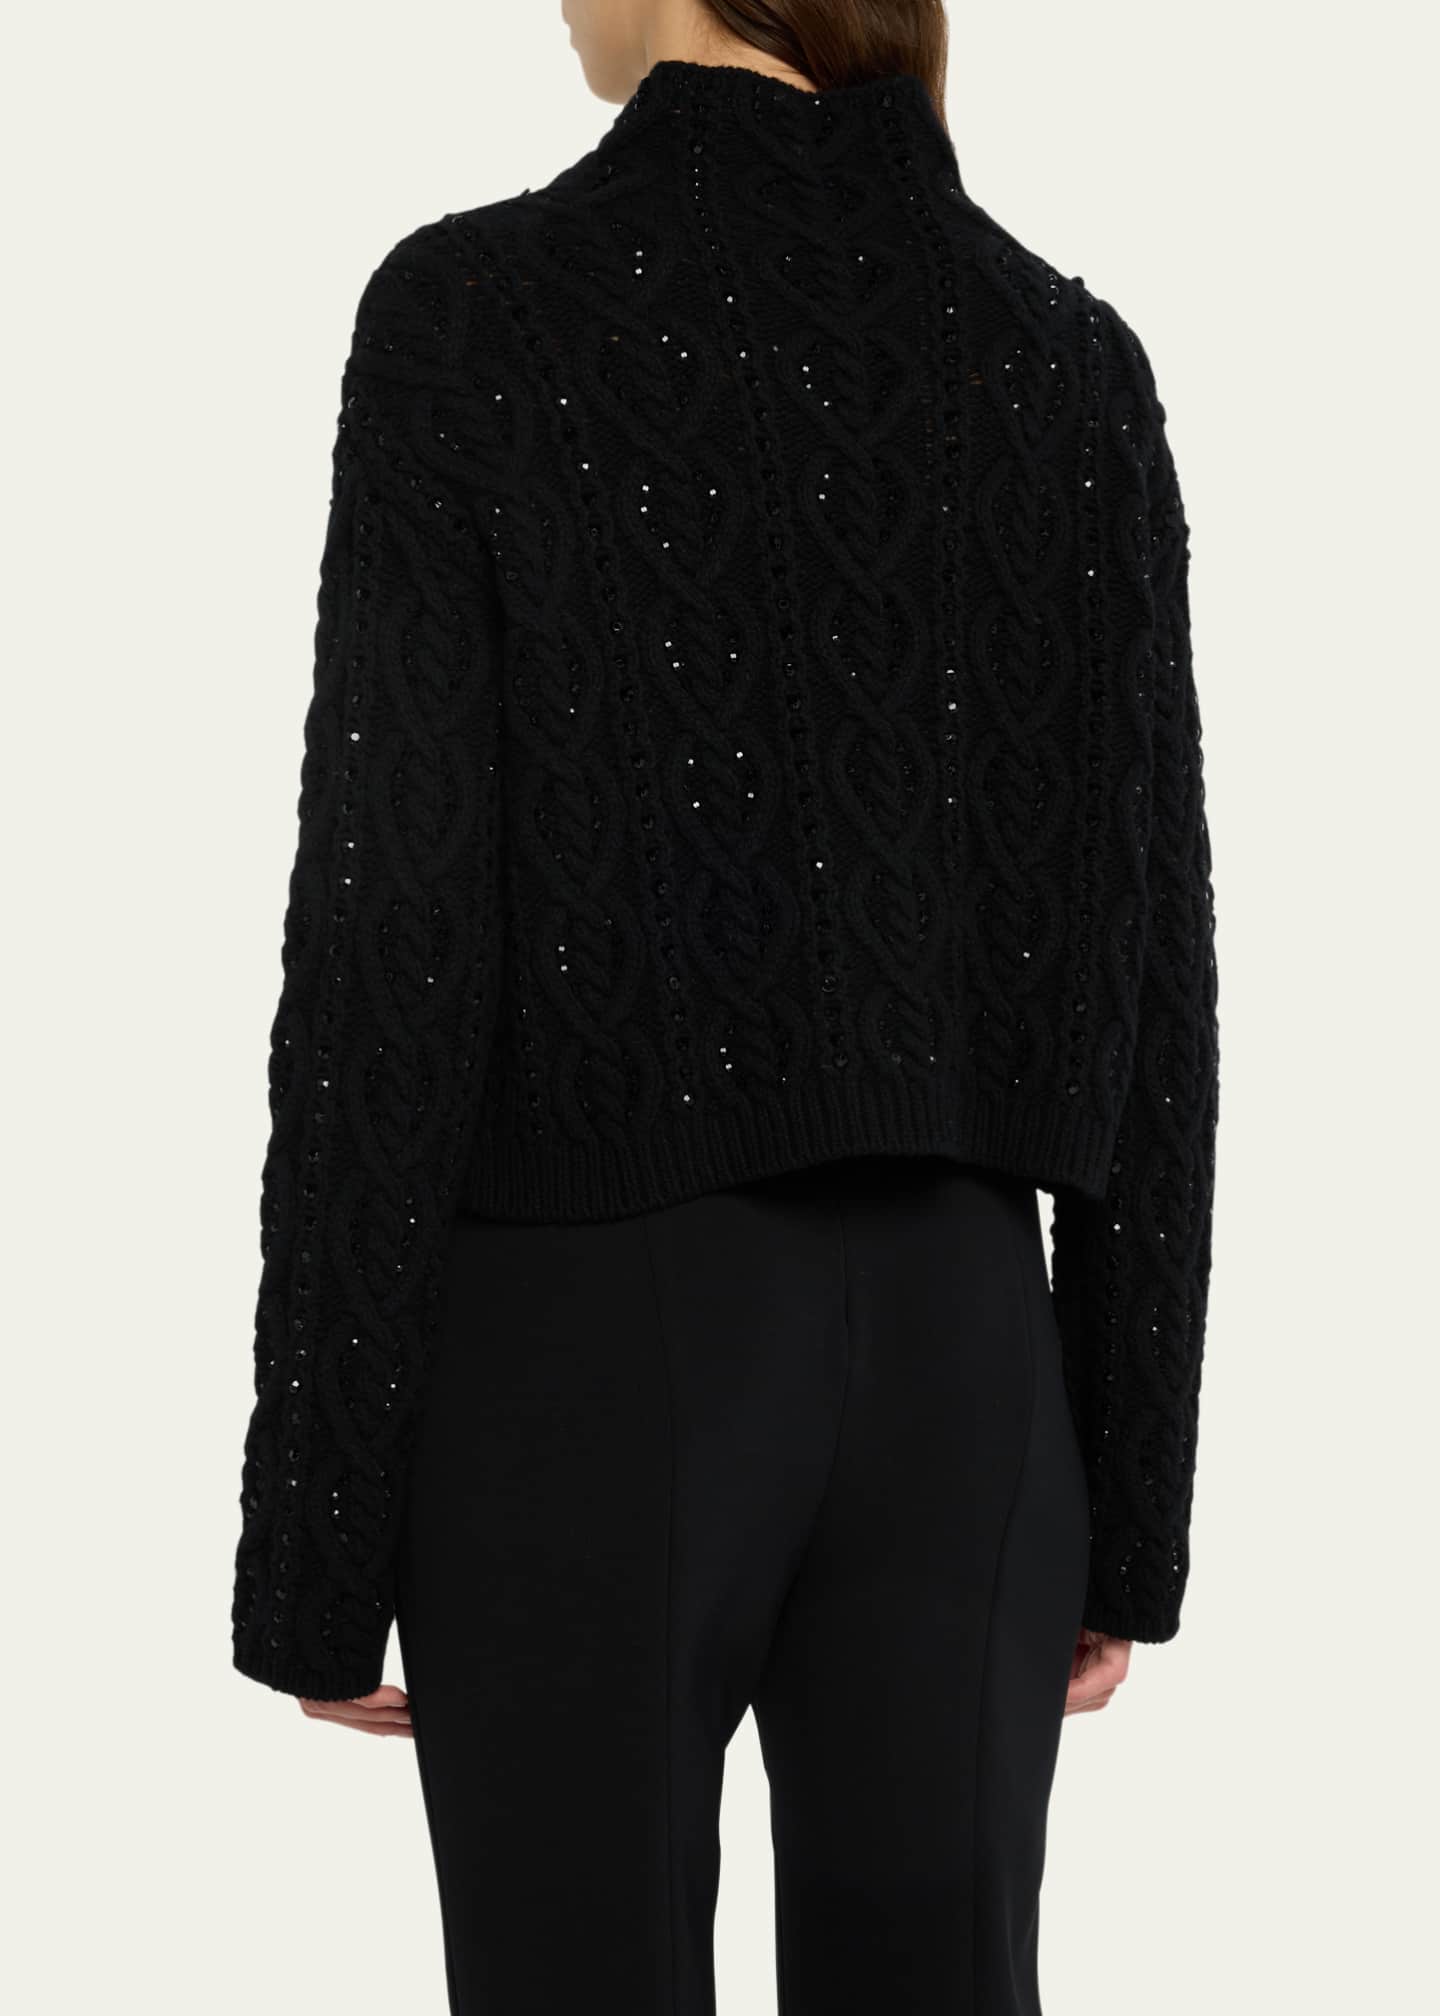 Carolina Herrera Embellished Cable Cashmere Wool Sweater - Bergdorf Goodman